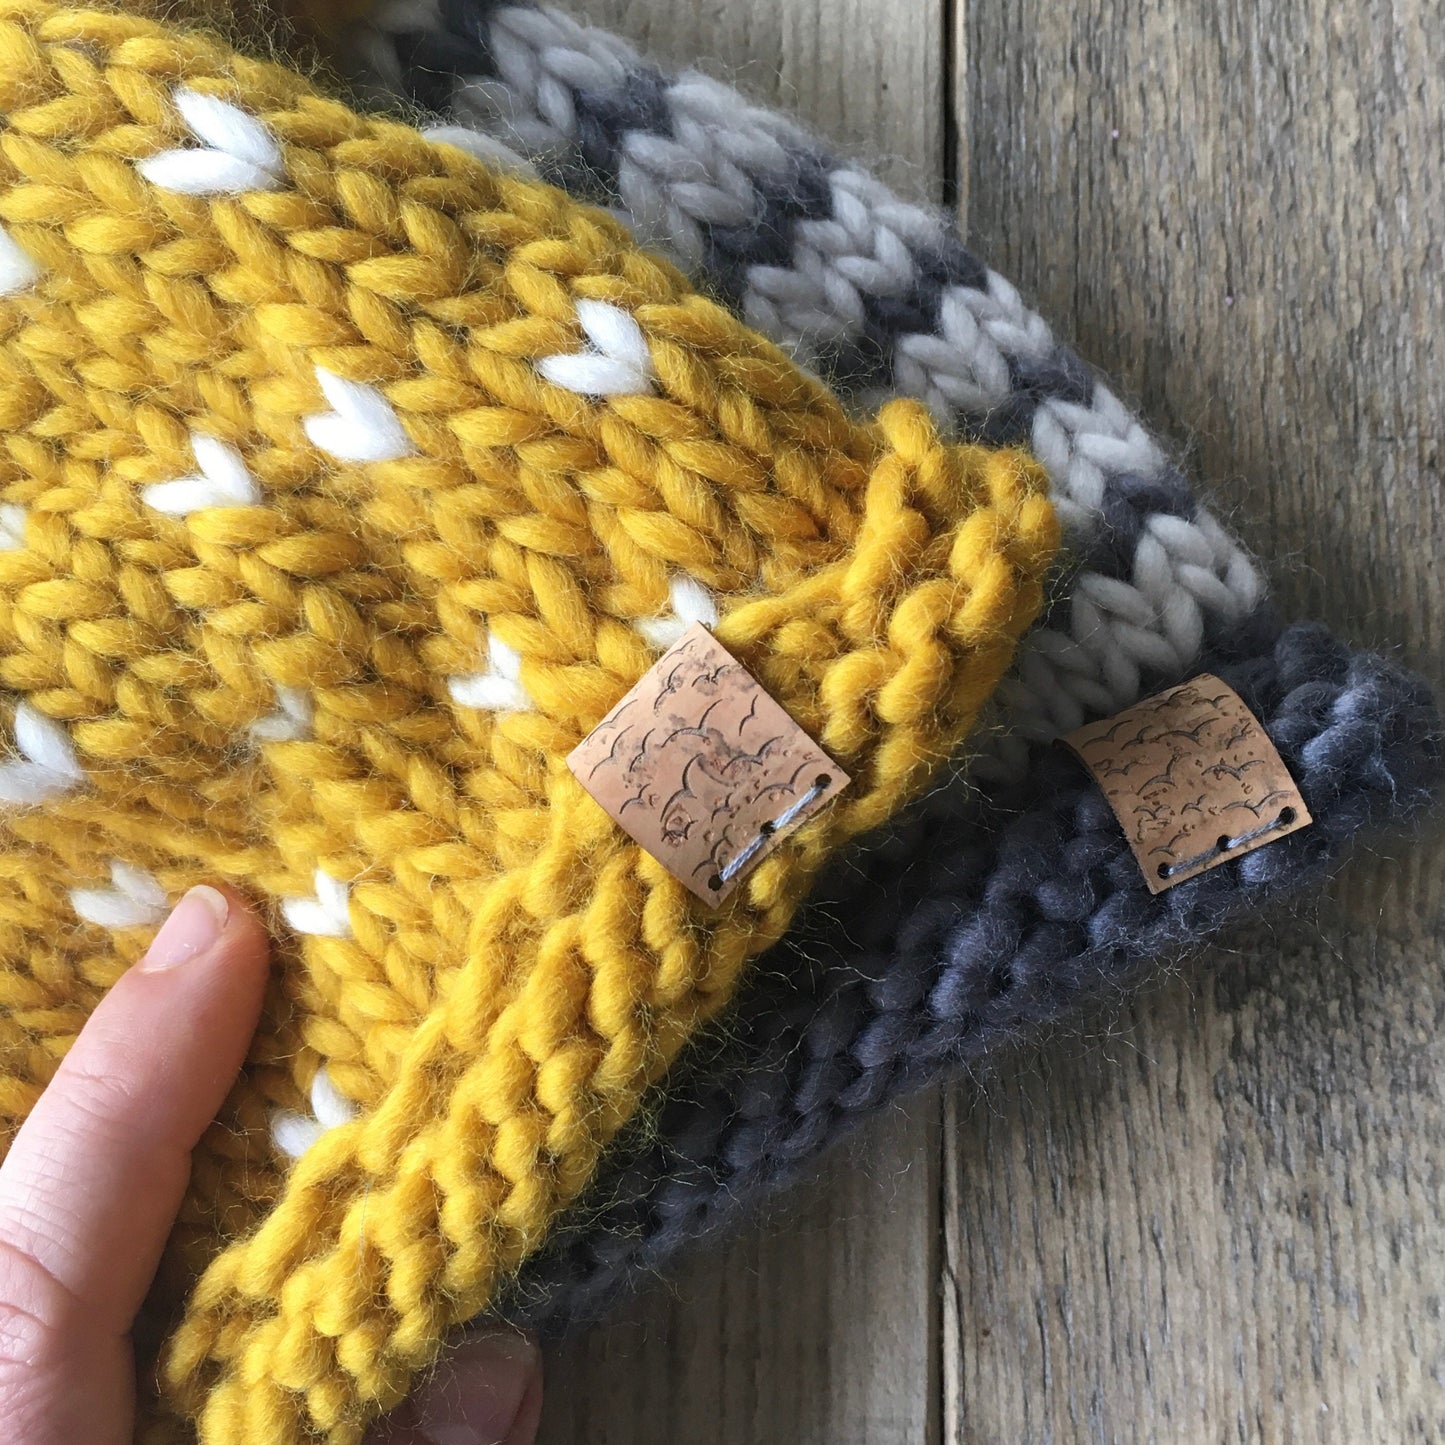 Bobble Hat | baby size | mustard yellow heart spot | merino wool handknit hat